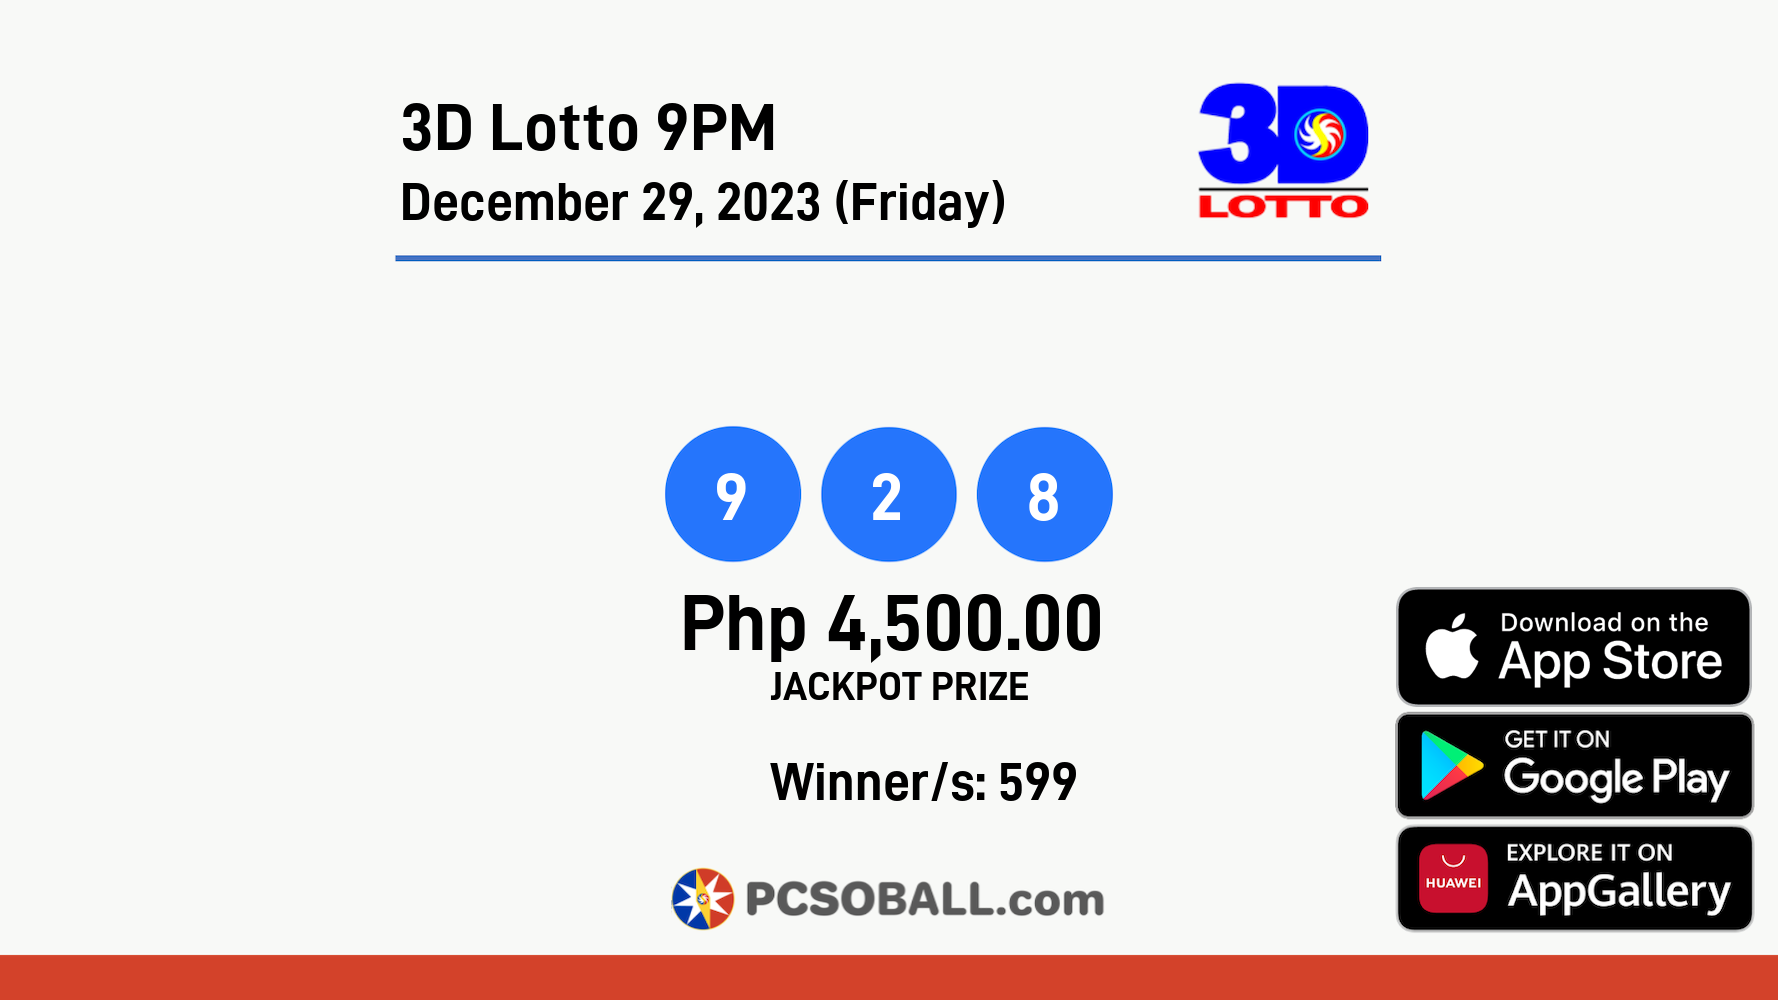 3D Lotto 9PM December 29, 2023 (Friday) Result